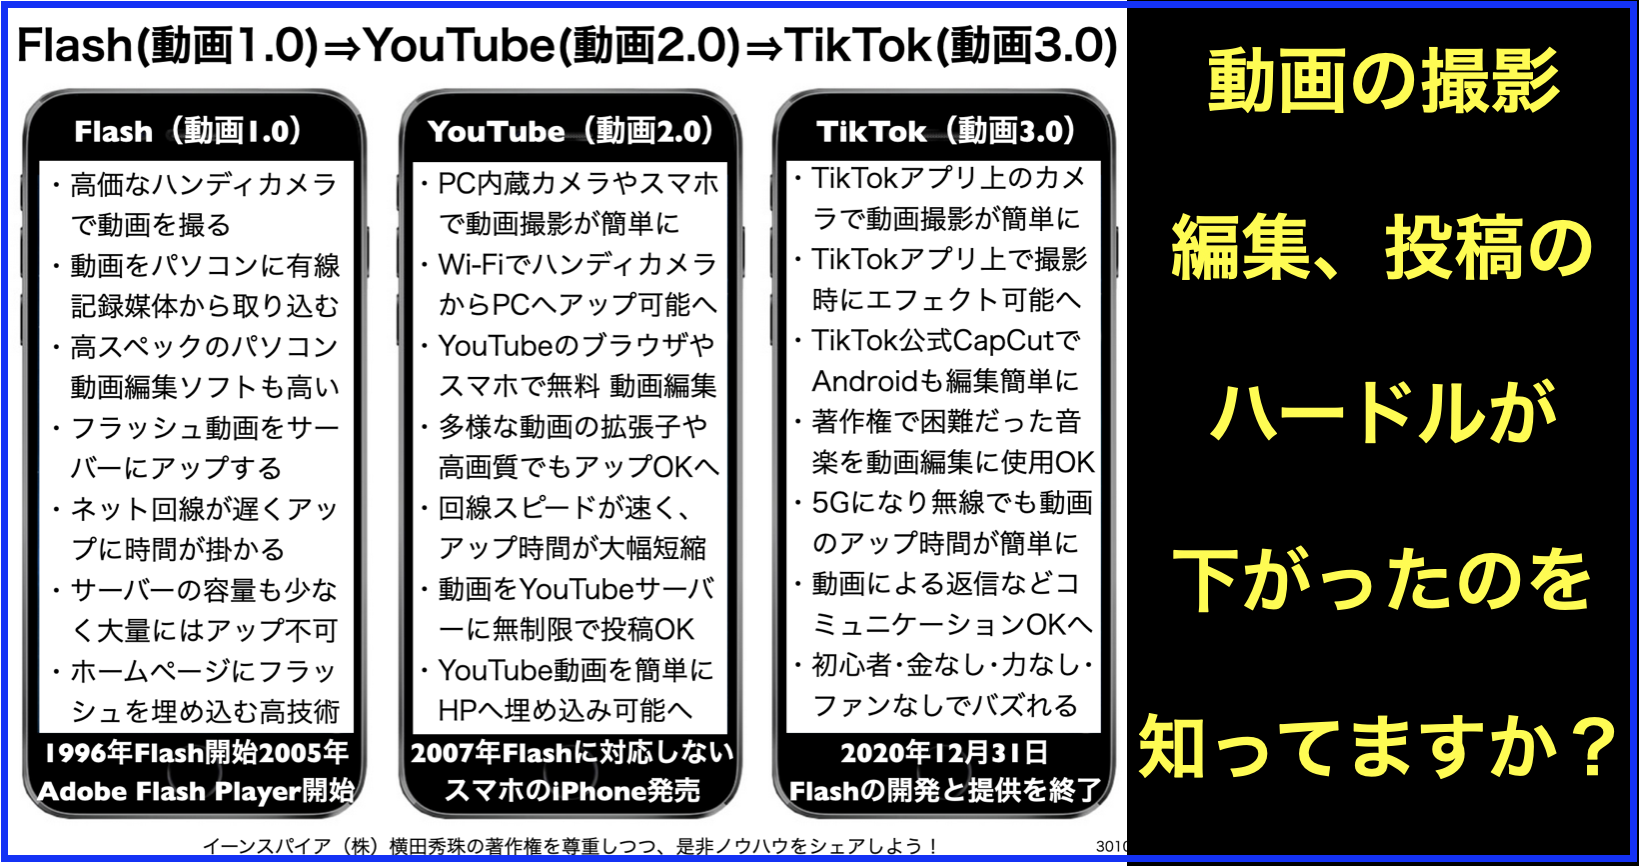 Flash(動画1.0)⇒YouTube(動画2.0)⇒TikTok(動画3.0)へ